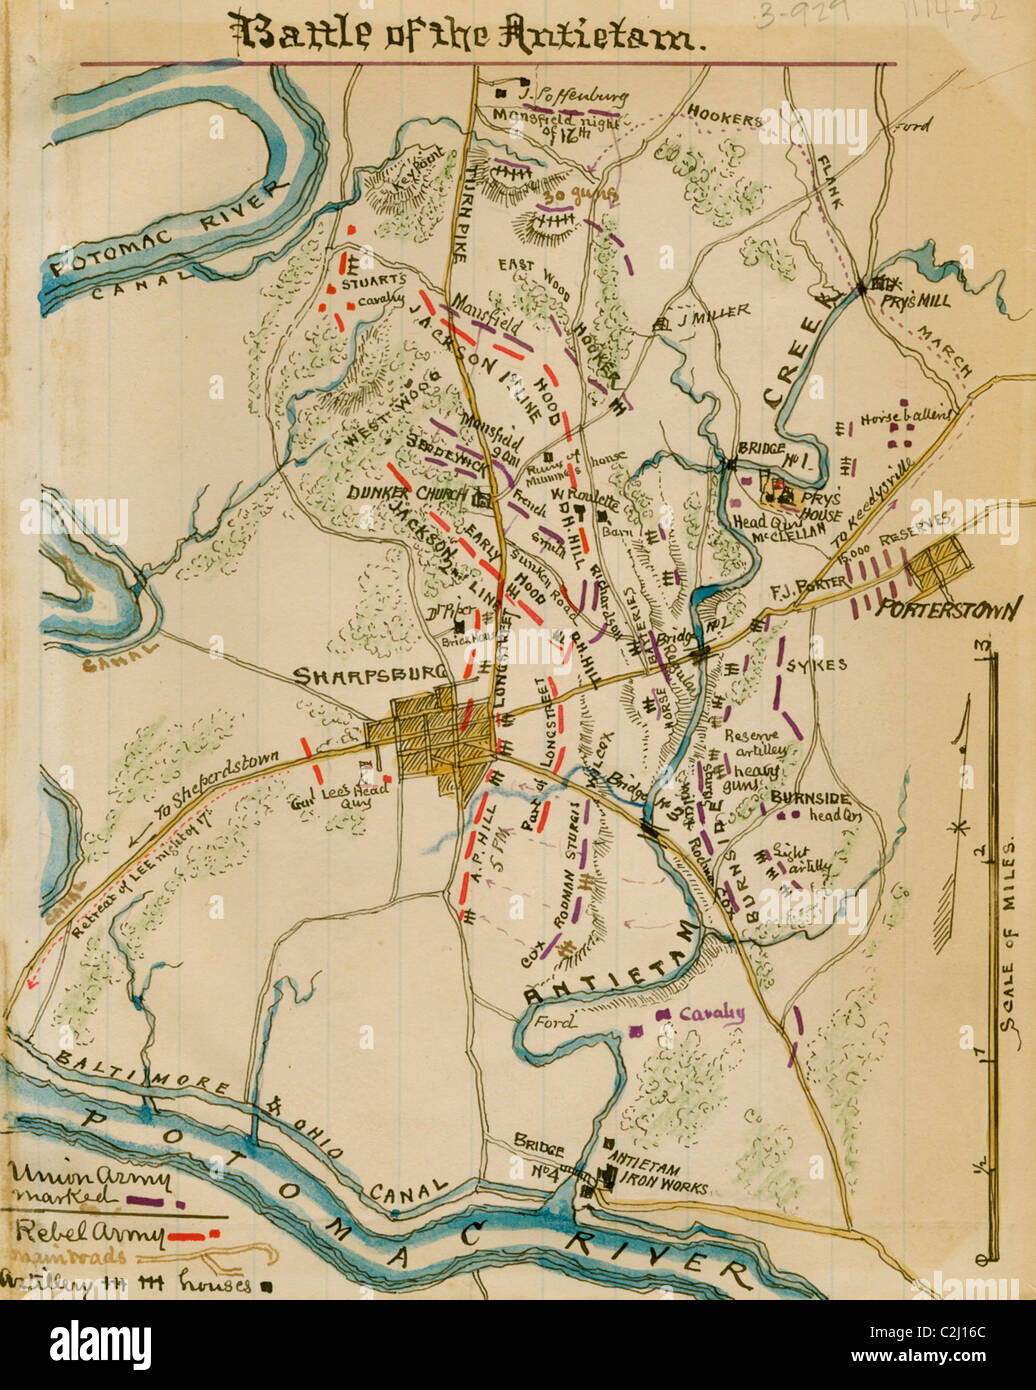 Battle of Sharpsburg, Antietam Stock Photo